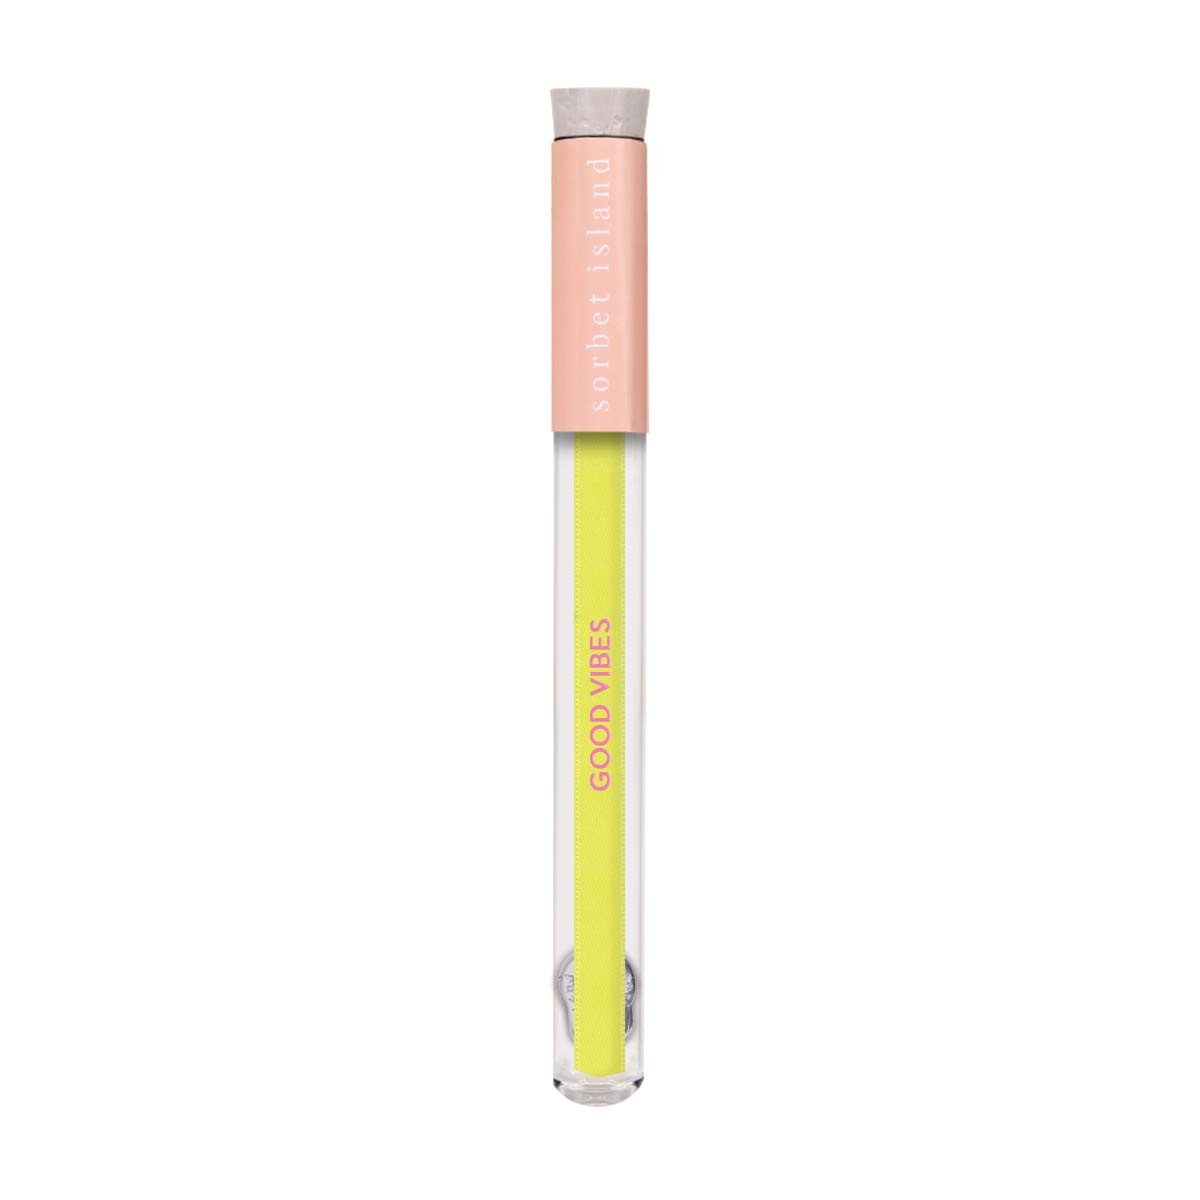  Armband Satin Bracelet "GOOD VIBES" Neon Gelb, verpackt im Reagenzglas